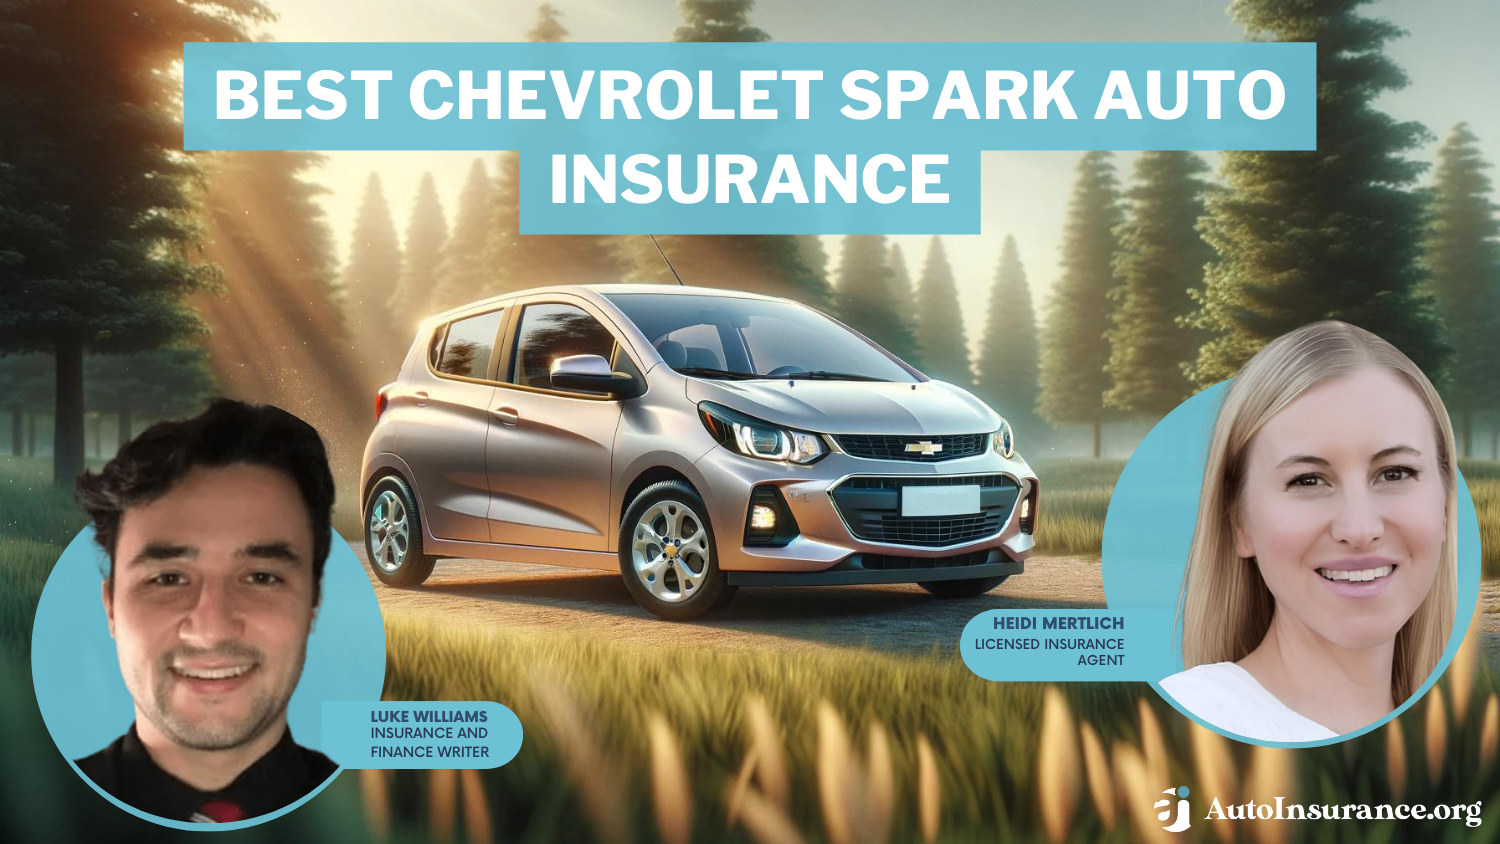 Best Chevrolet Spark Auto Insurance 